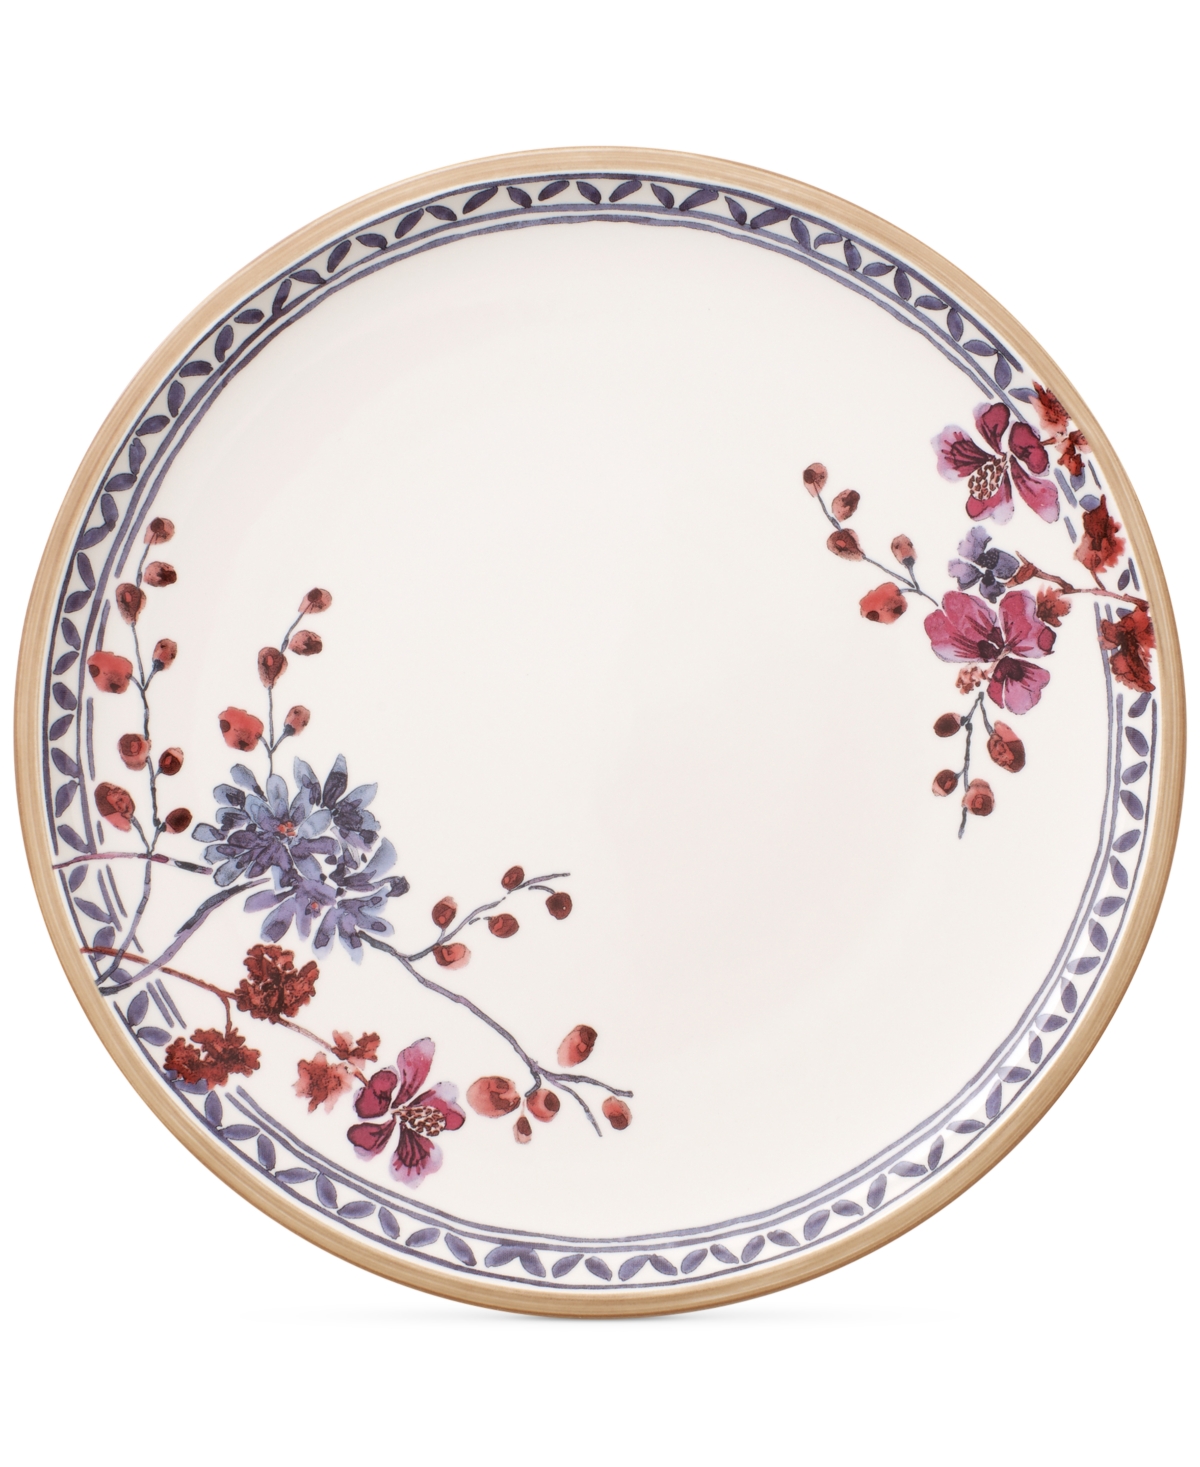 Artesano Provencal Lavender Collection Porcelain Floral Dinner Plate - multi